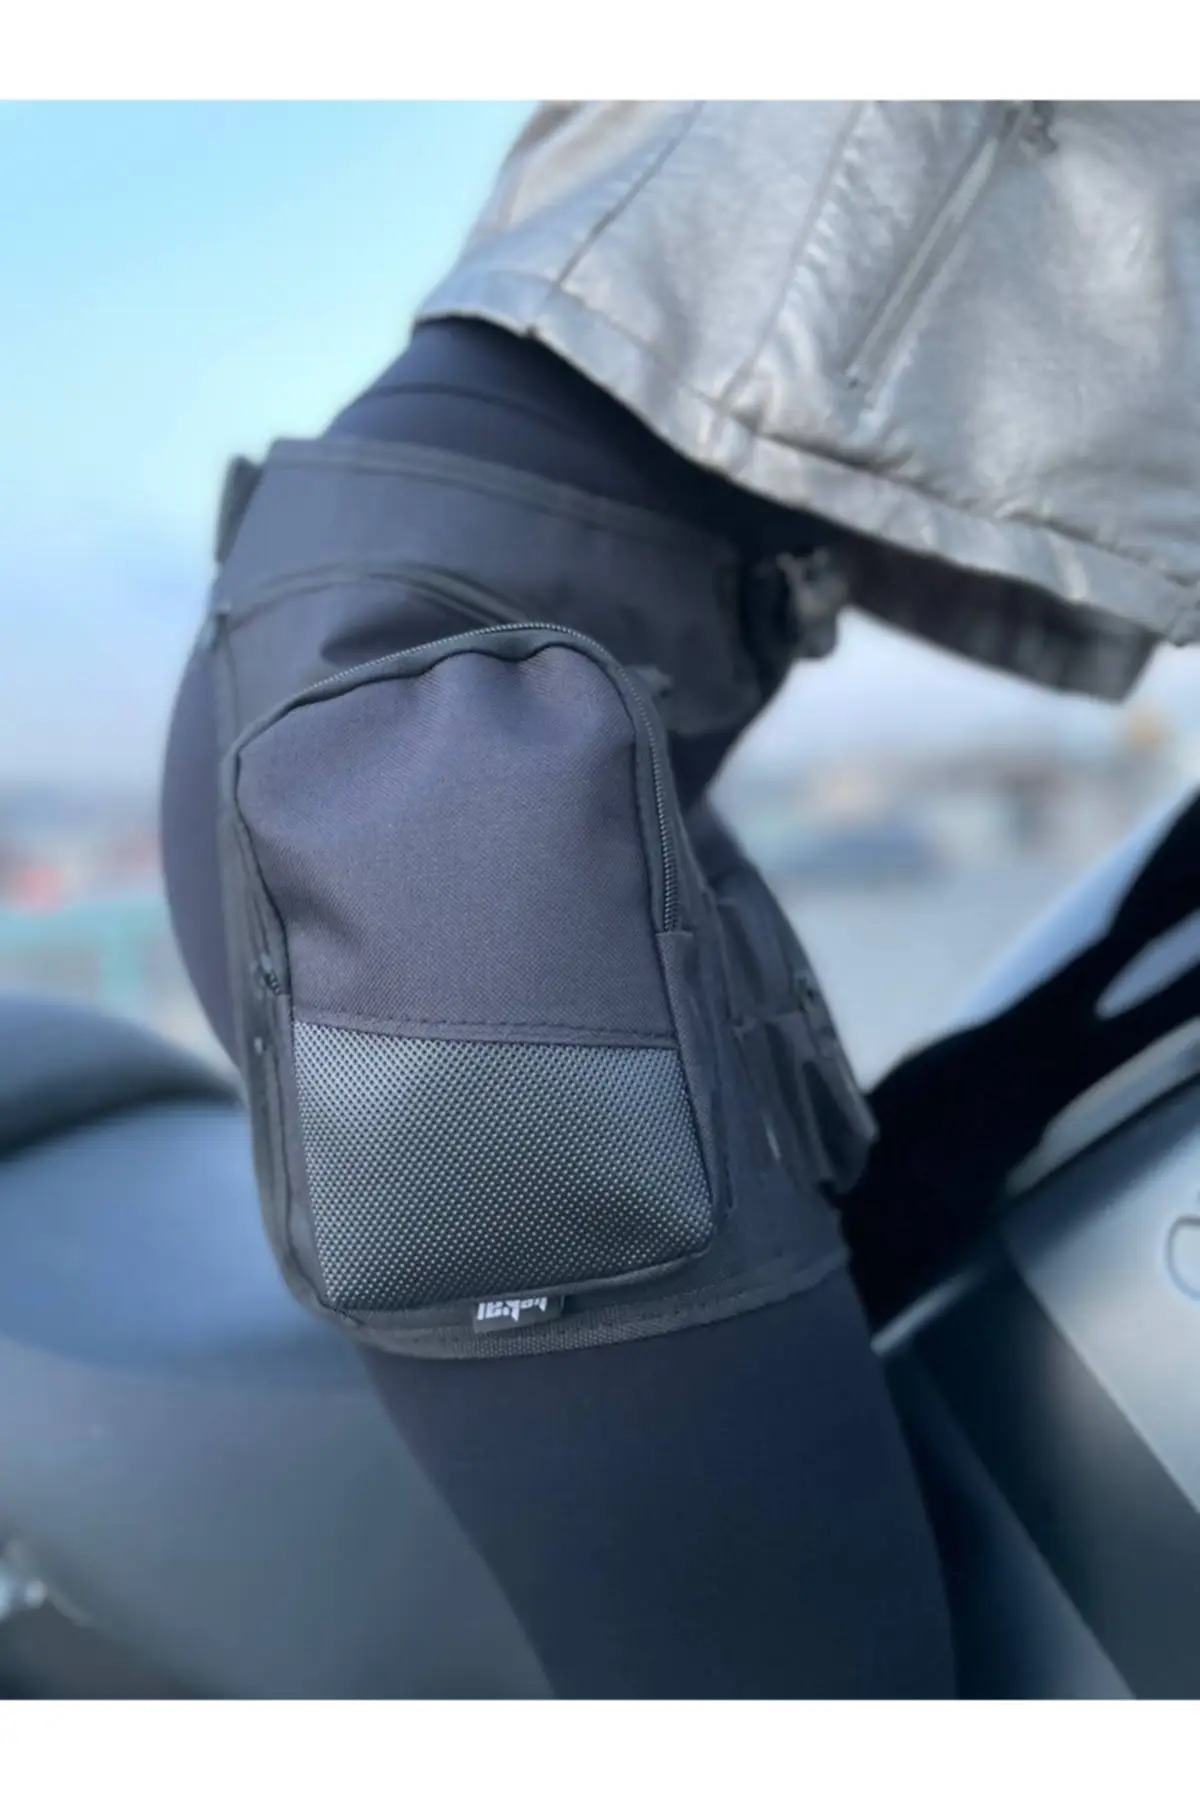 waist-leg-3-pocket-motorcycle-bicycle-travel-bag-waterproof-belt-diagonal-high-quality-cell-mobile-phone-wallet-storage